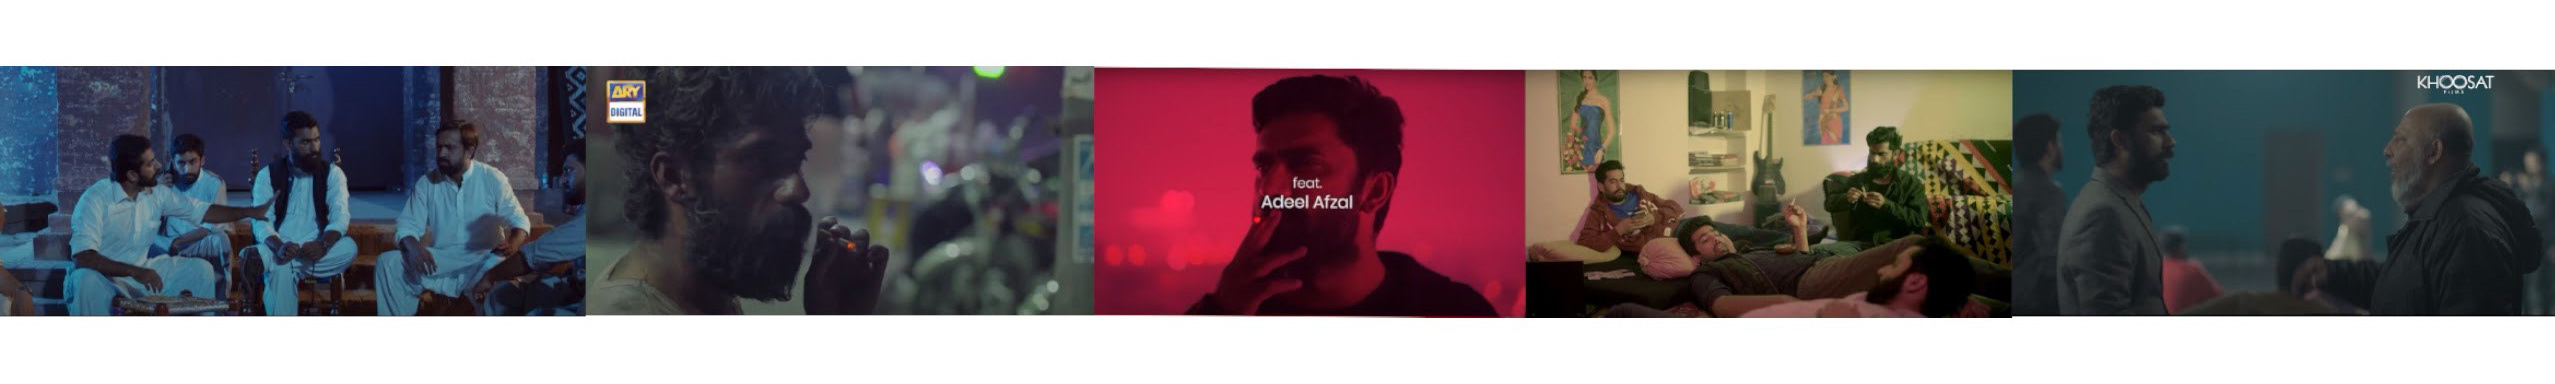 Баннер профиля Adeel Afzal